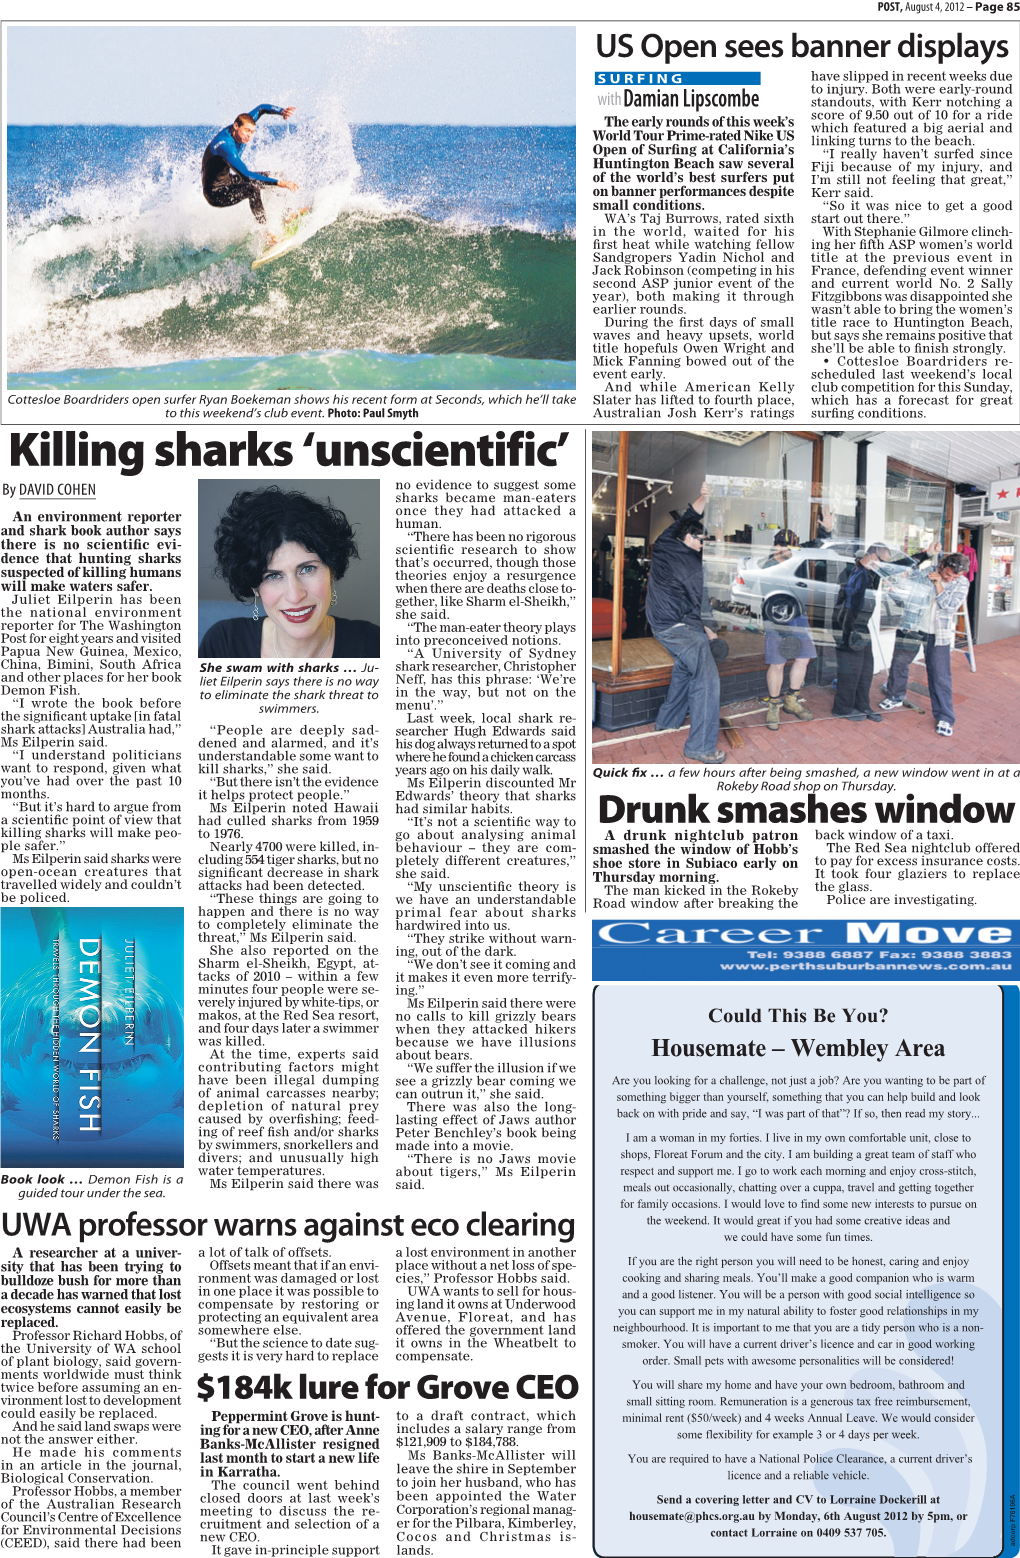 Killing Sharks 'Unscientific'